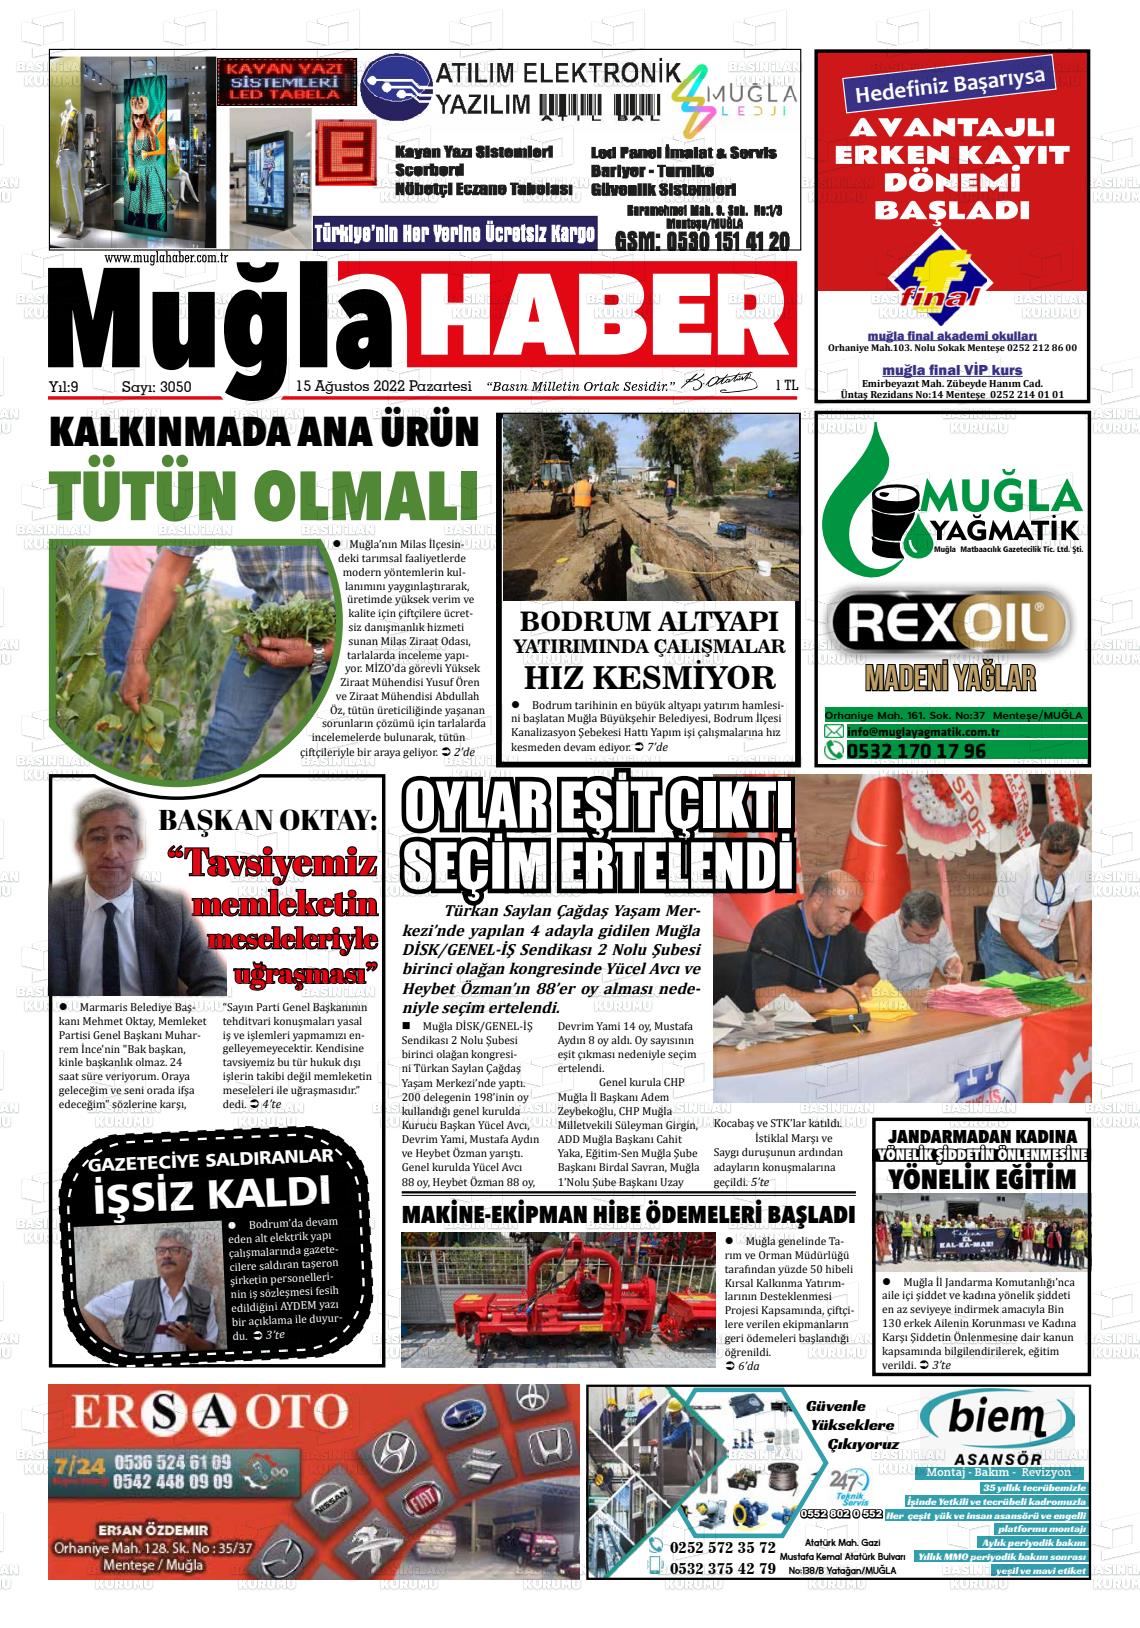 15 Ağustos 2022 Muğla Haber Gazete Manşeti